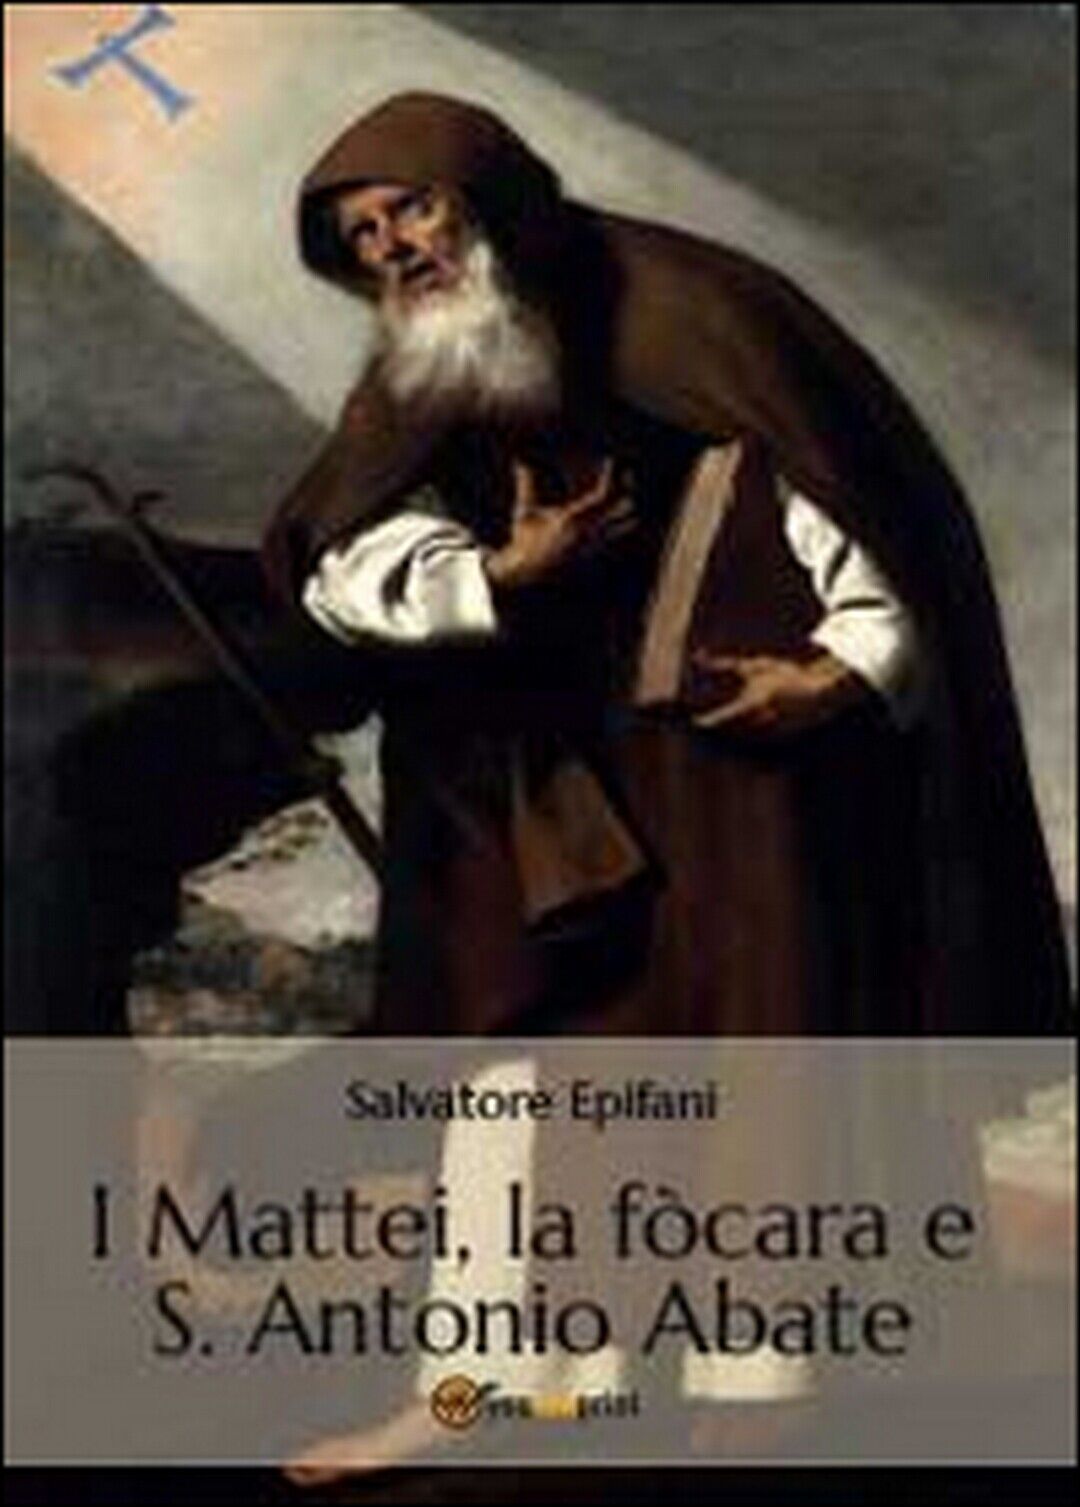 I Mattei, la f?cara e S. Antonio Abate, Salvatore Epifani,  2014,  Youcanprint